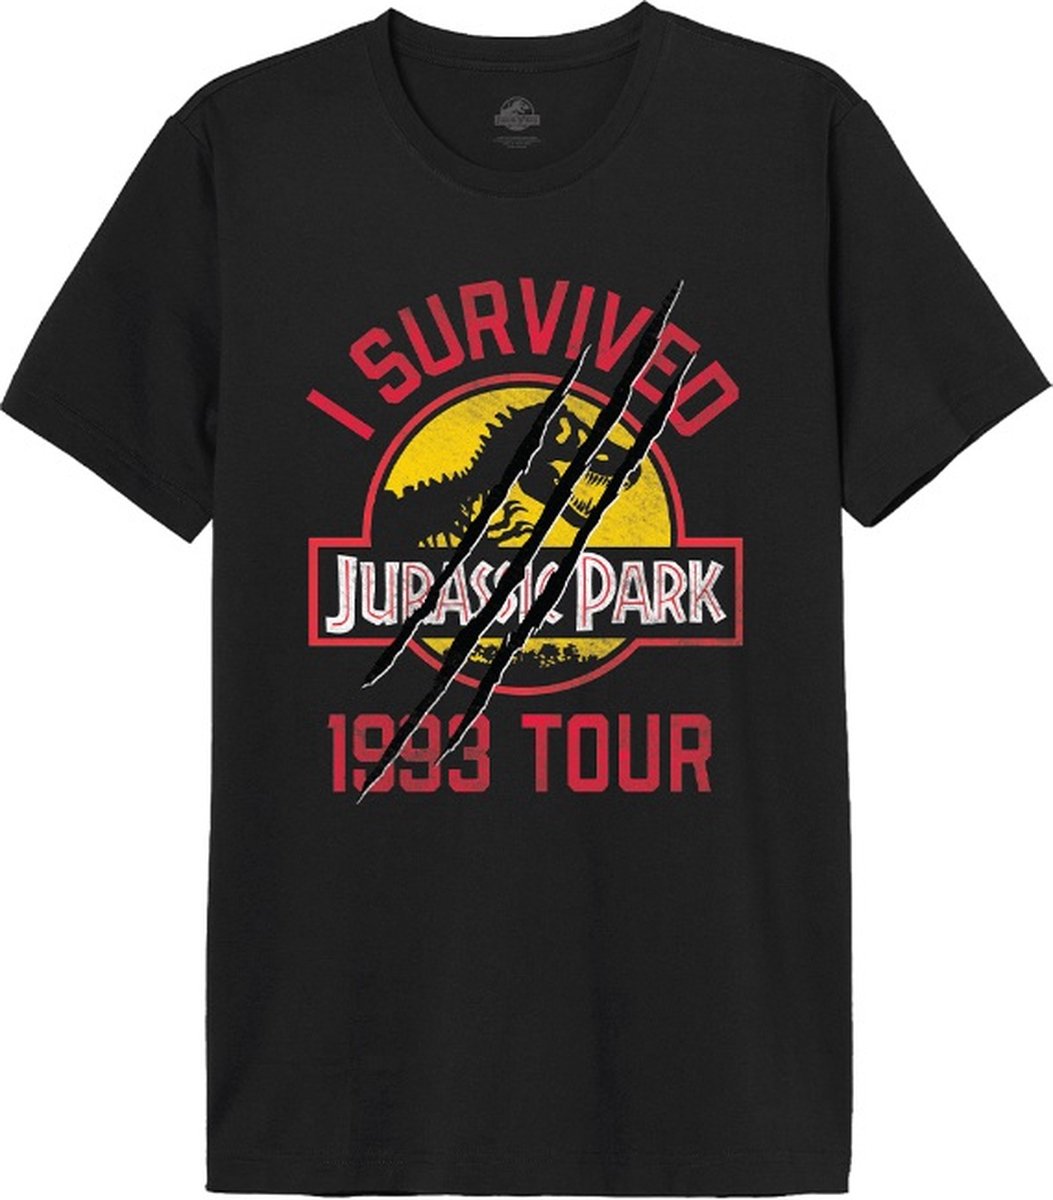 JURASSIC PARK - I SURVIVED 1993 TOUR - T-SHIRT (XXL)